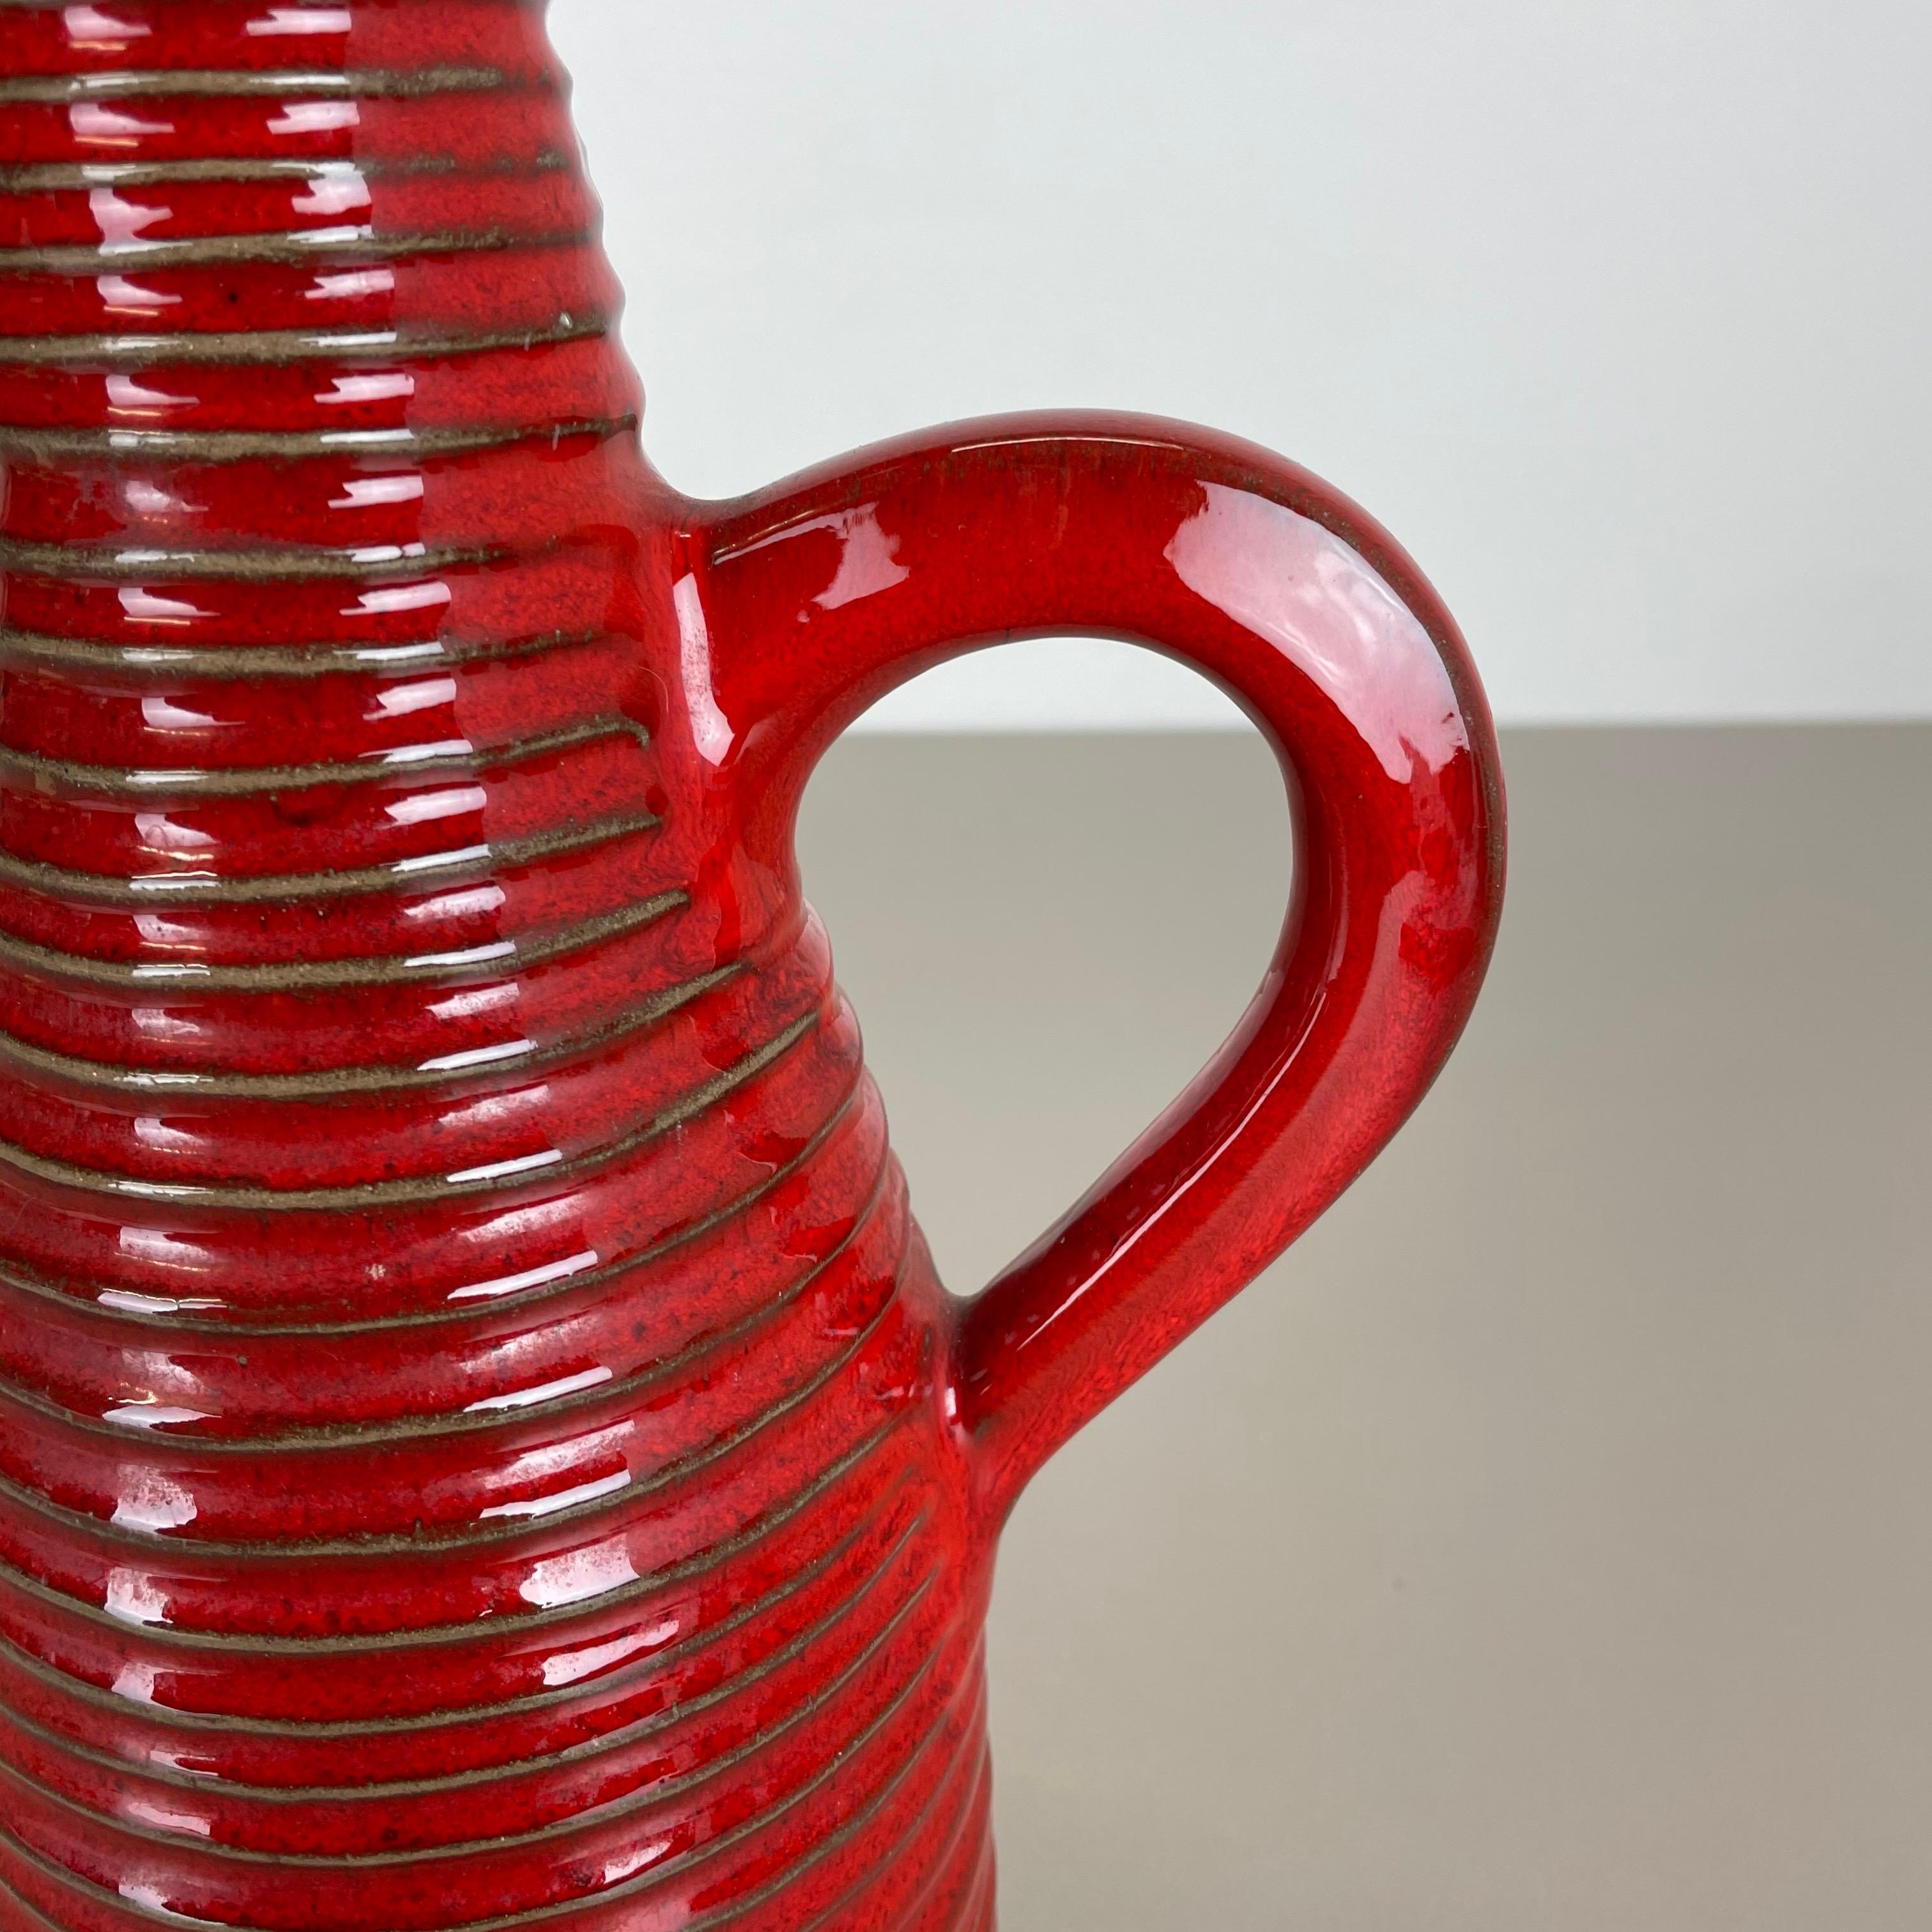 Original 1970 Red Ceramic Studio Pottery Vase by Marei Ceramics, Germany For Sale 3